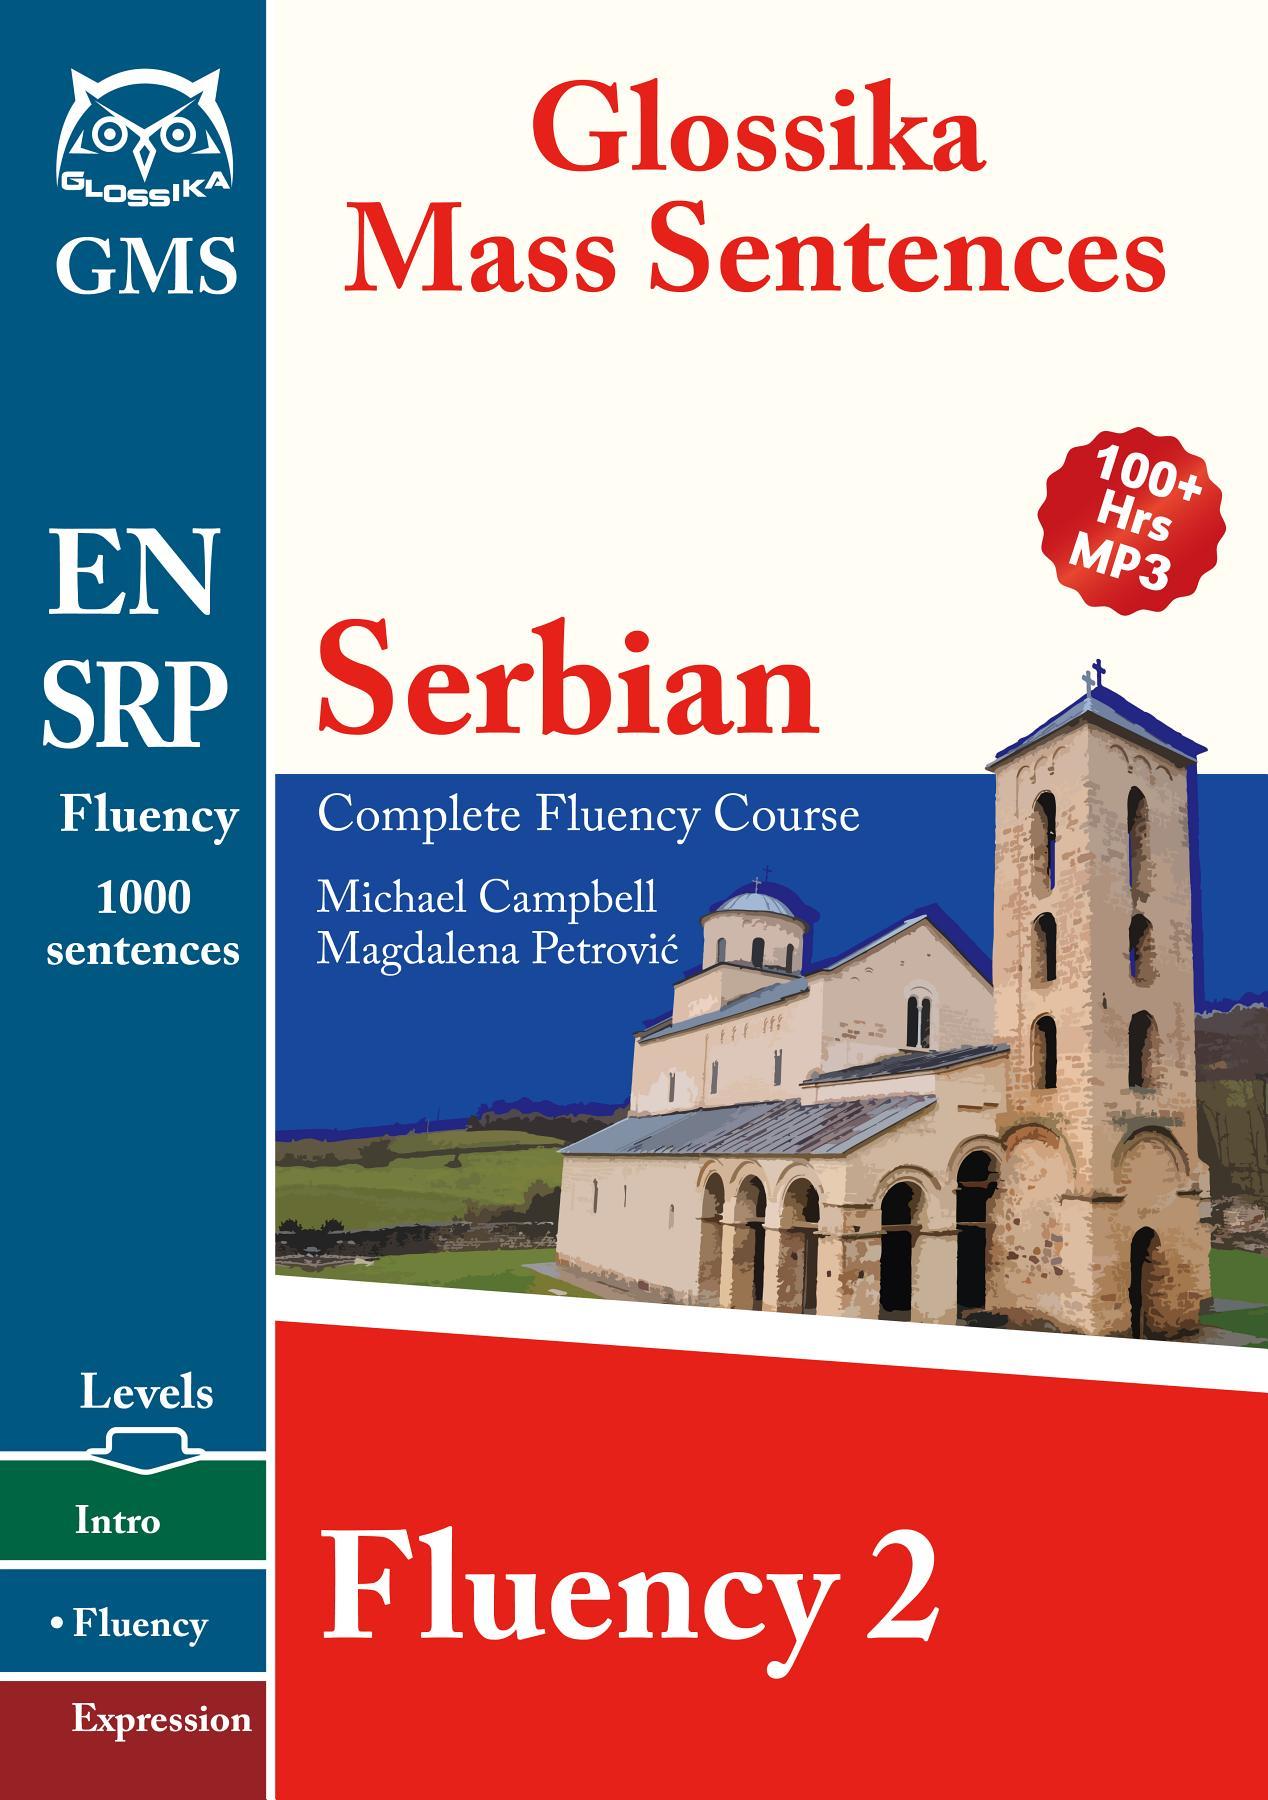 Serbian Fluency 2 - Glossika Mass Sentences